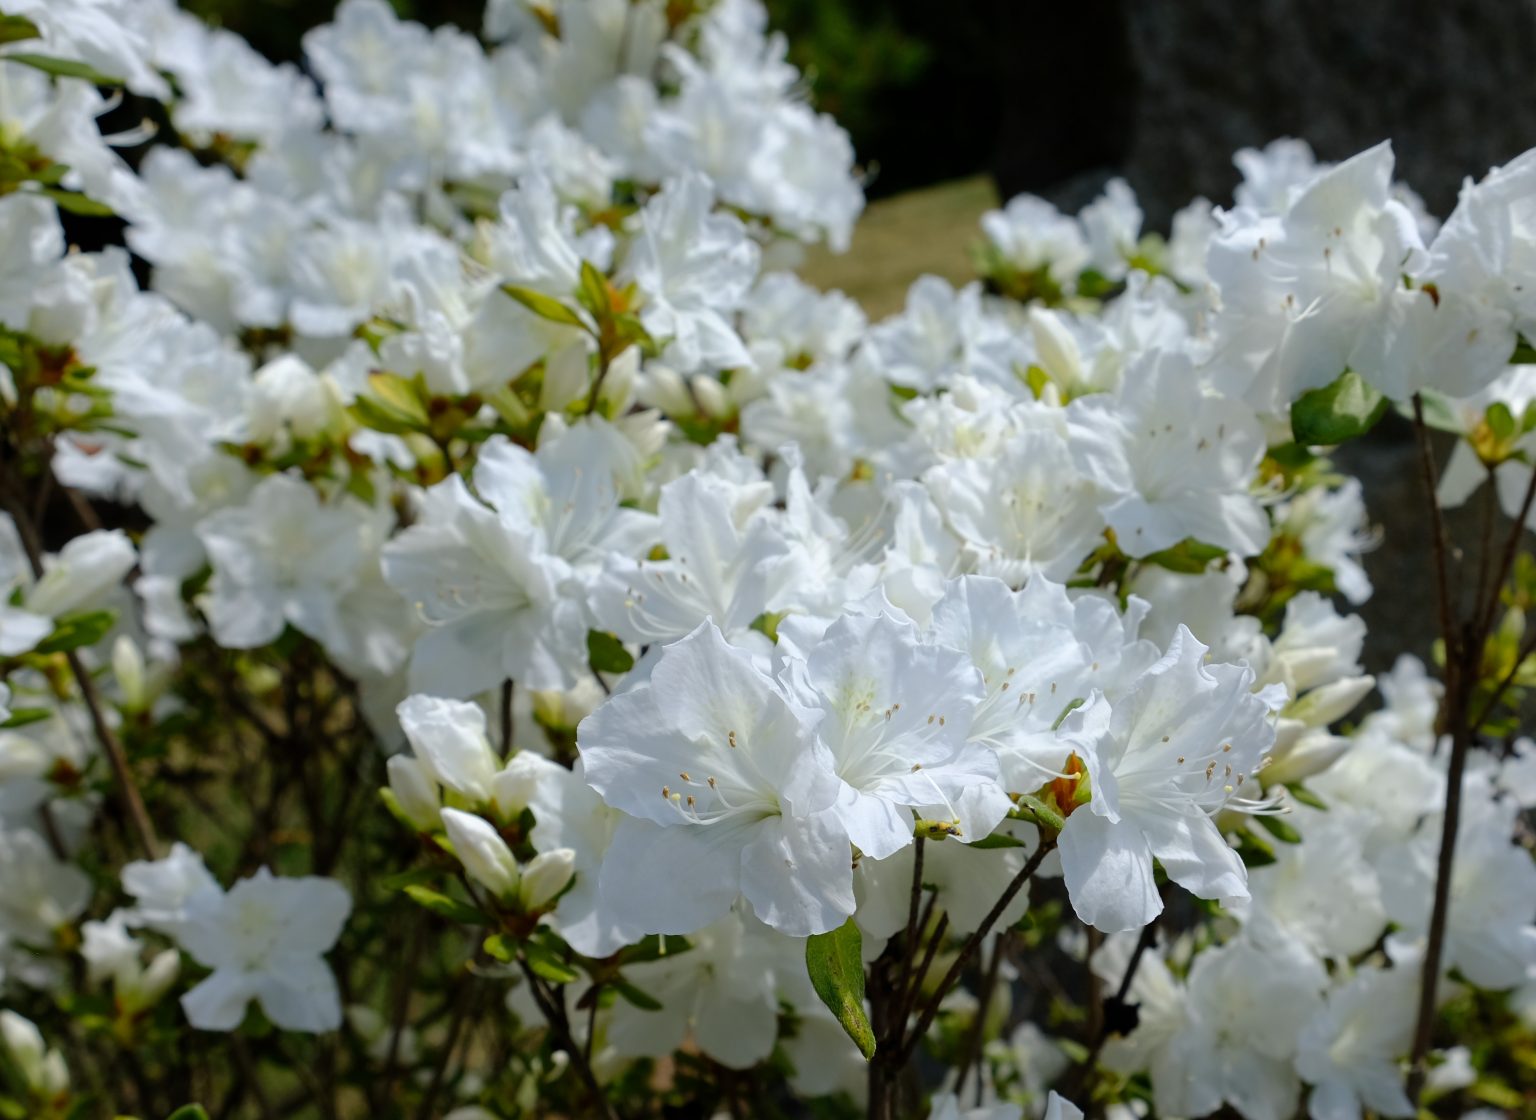 Rhododendron-JA-04-1-1536x1120-1